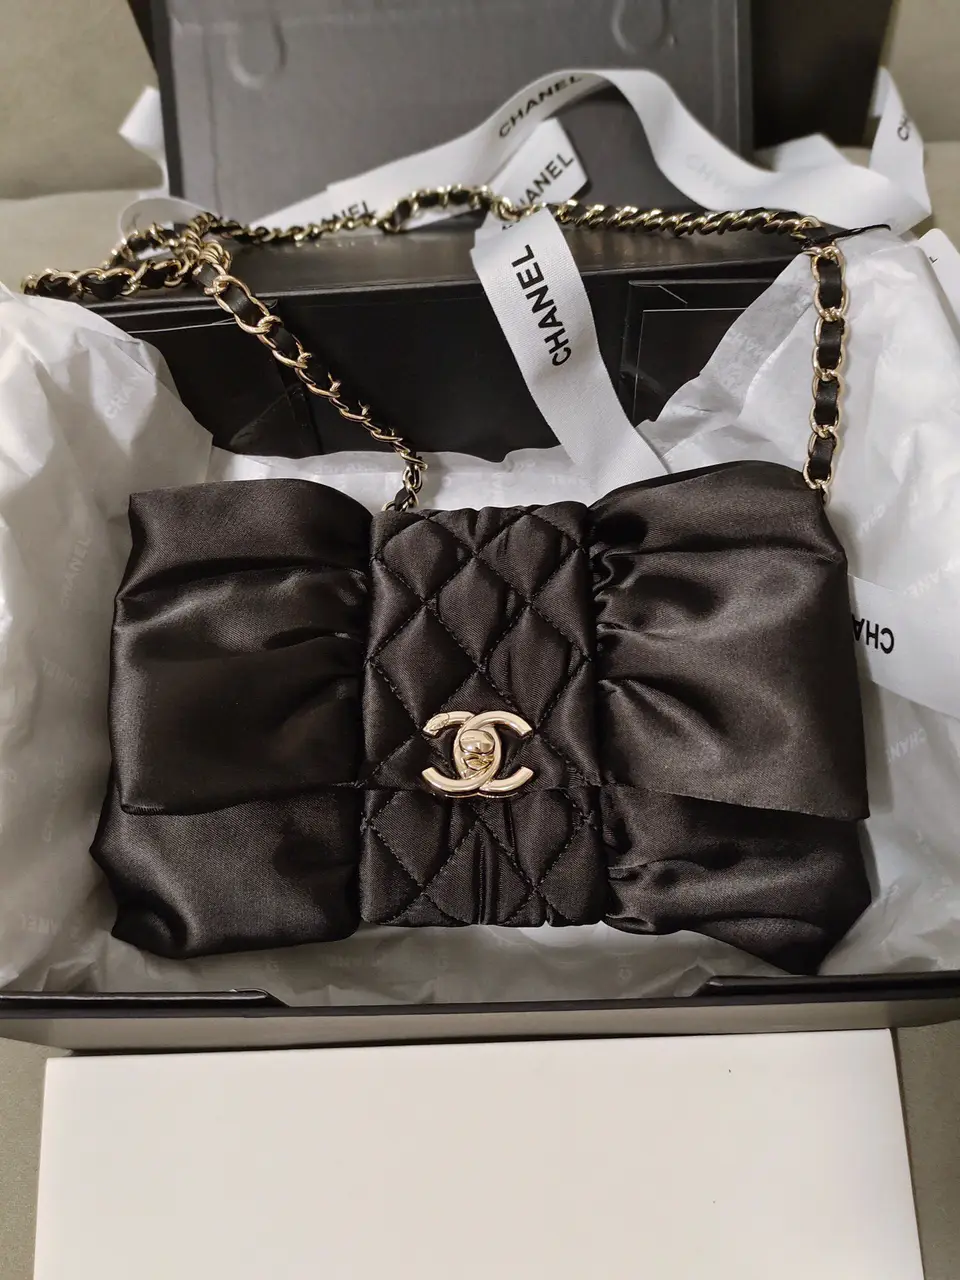 Sell Chanel Mini Crossbody Bag with Ribbon - Black